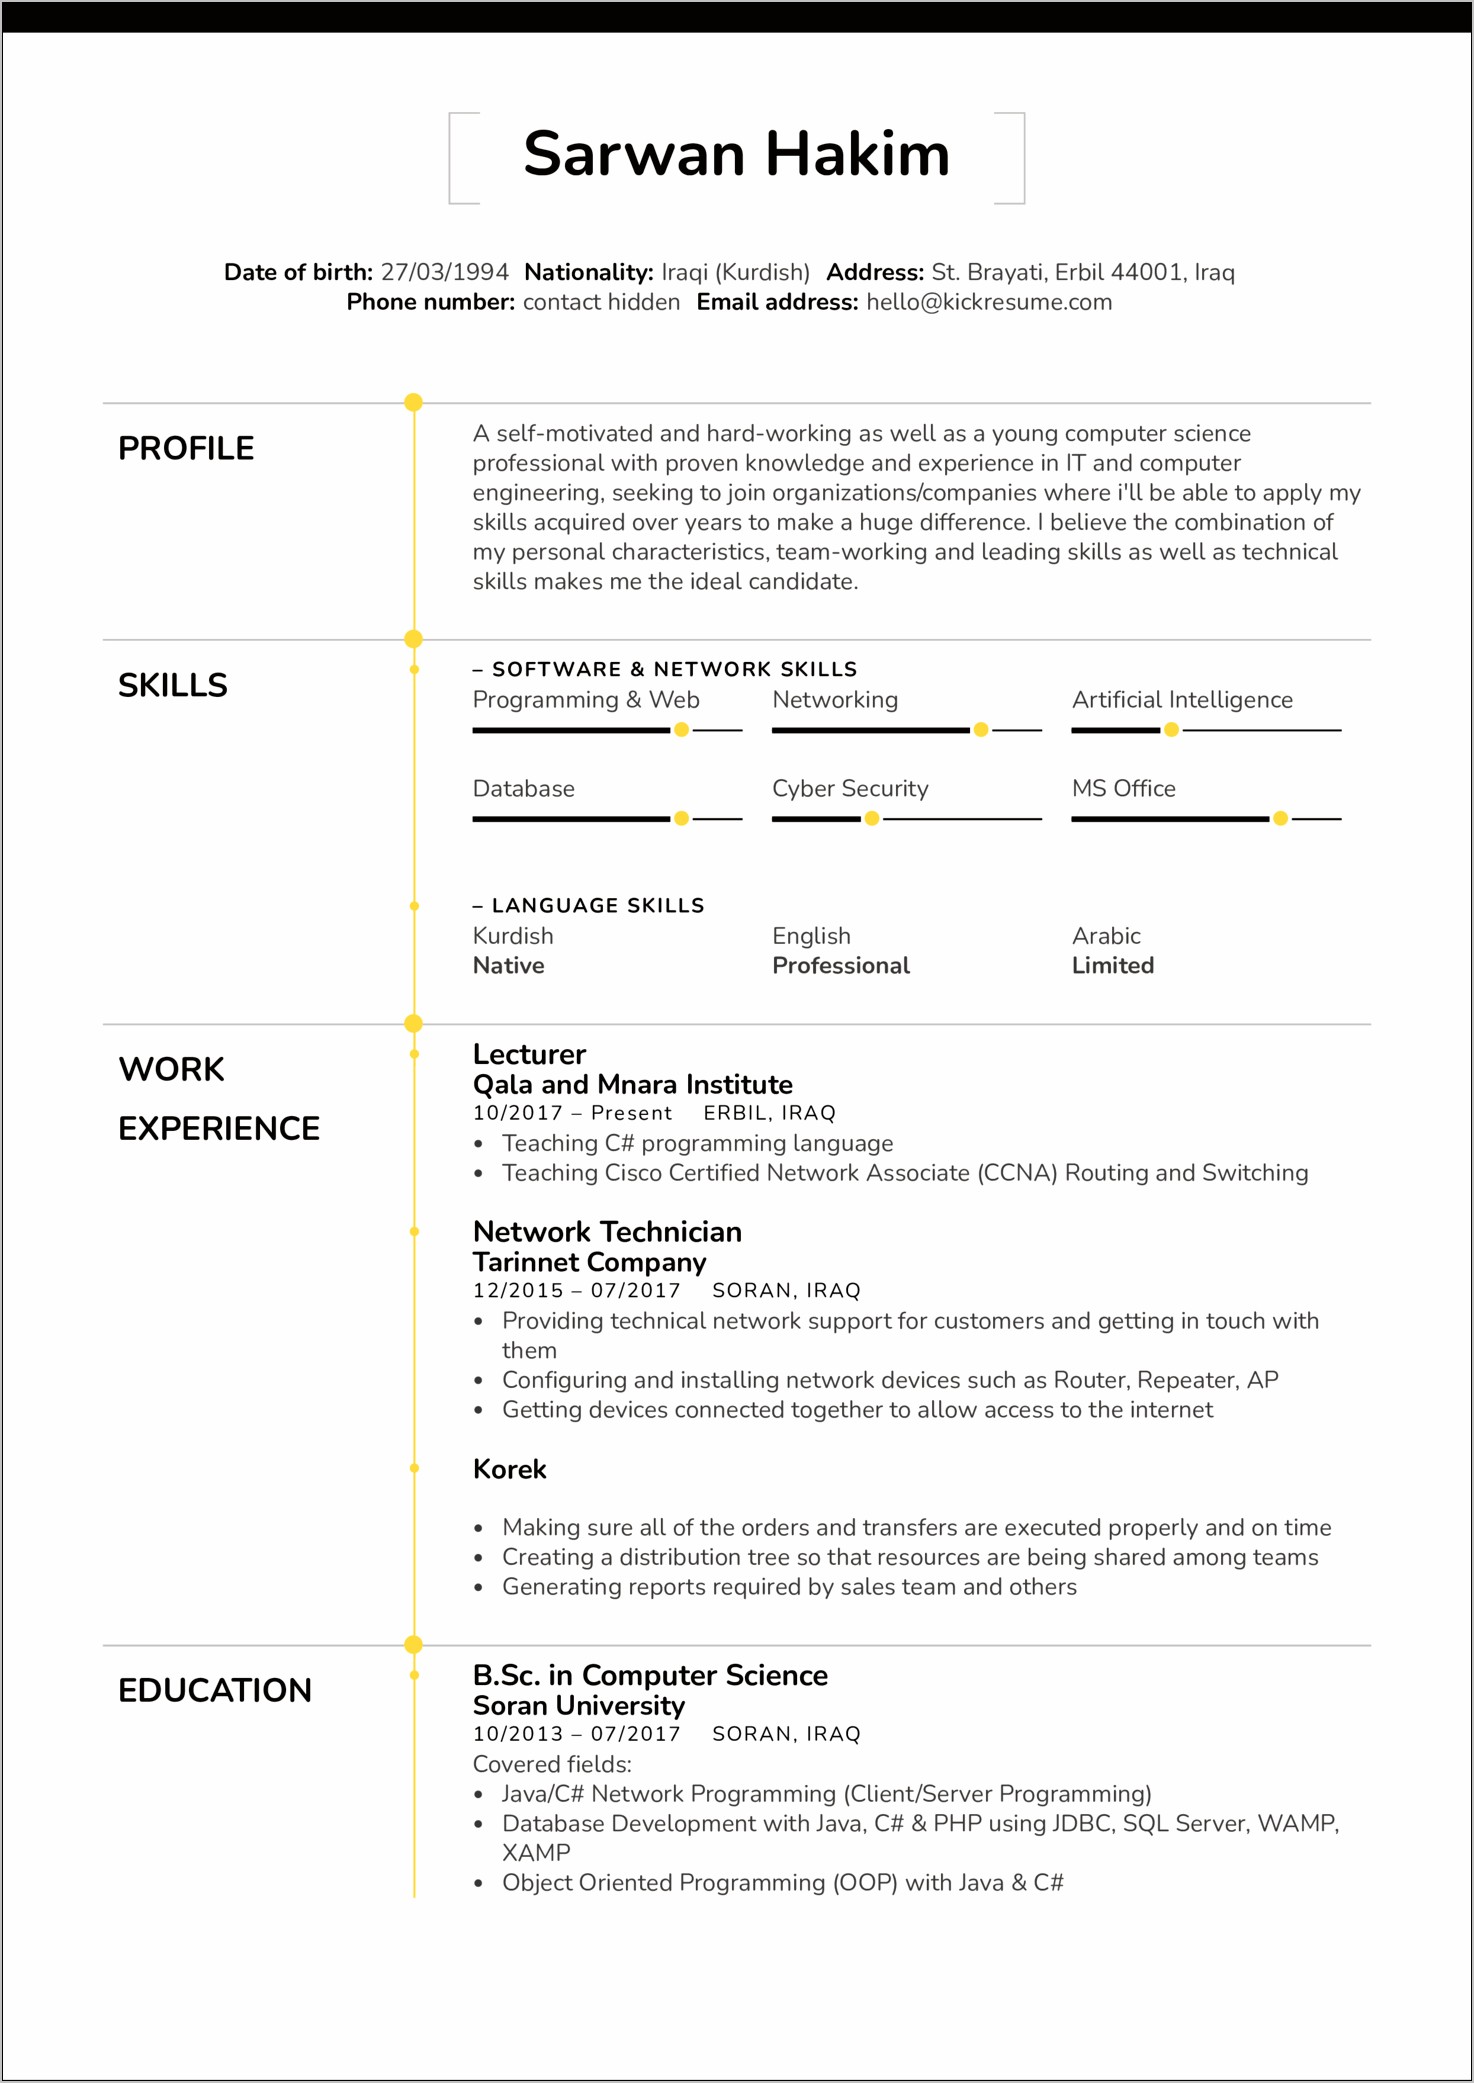 Sample Resume For Assistant Professor In Education